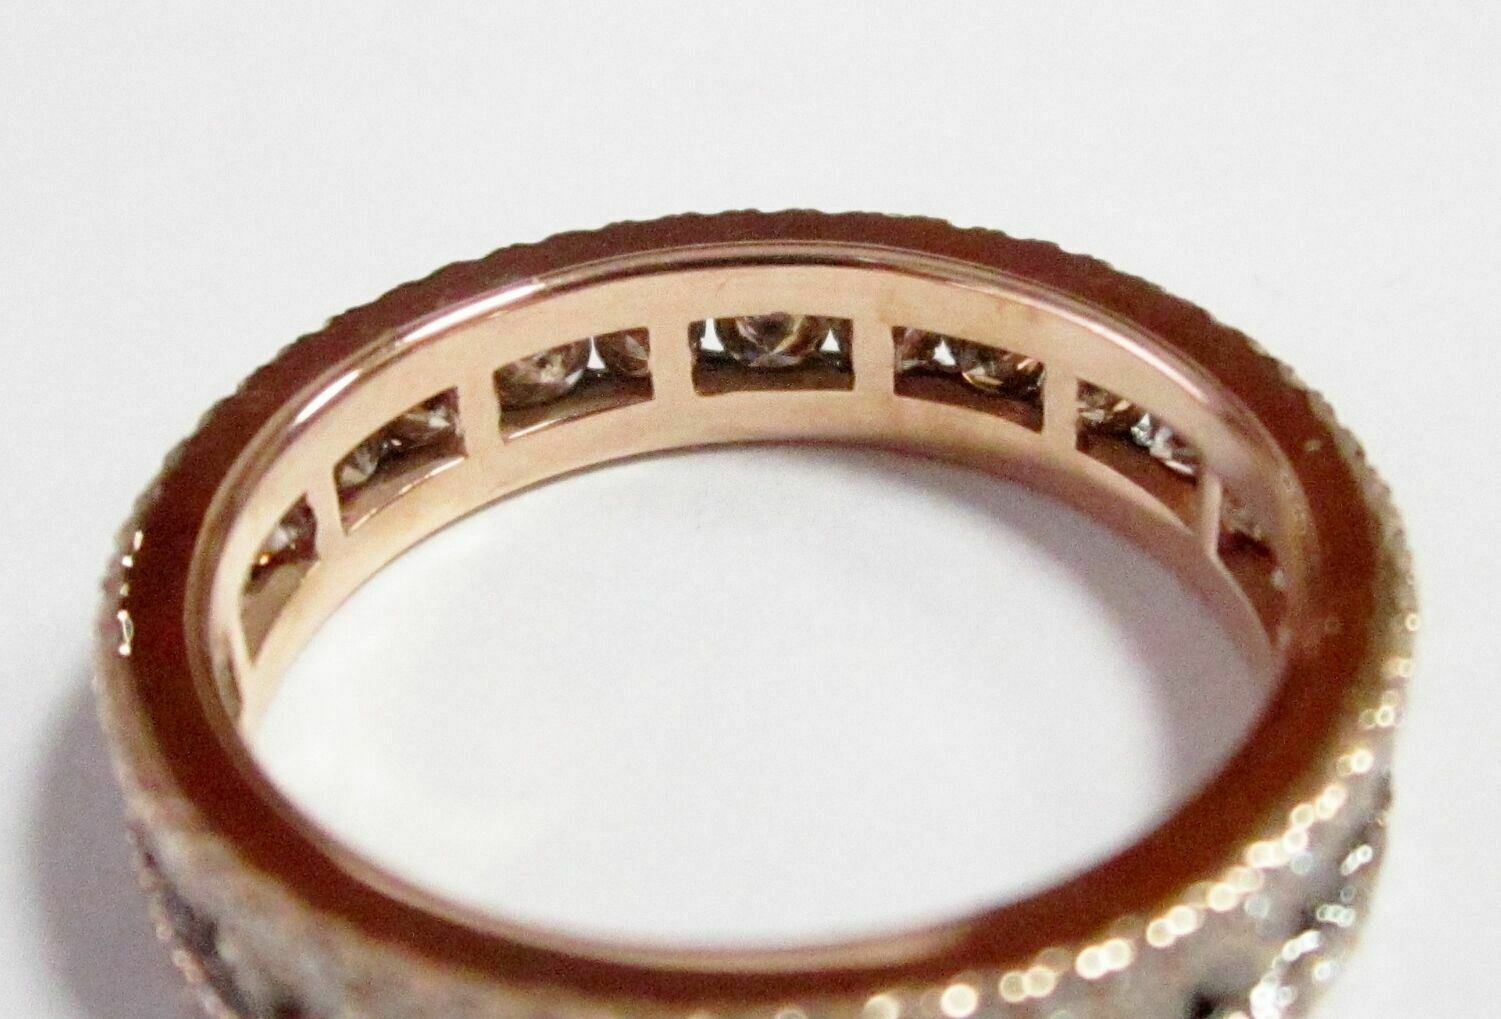 1.82 TCW Natural Fancy Intense Brown Diamond Eternity Ring Size 5 14k Rose Gold